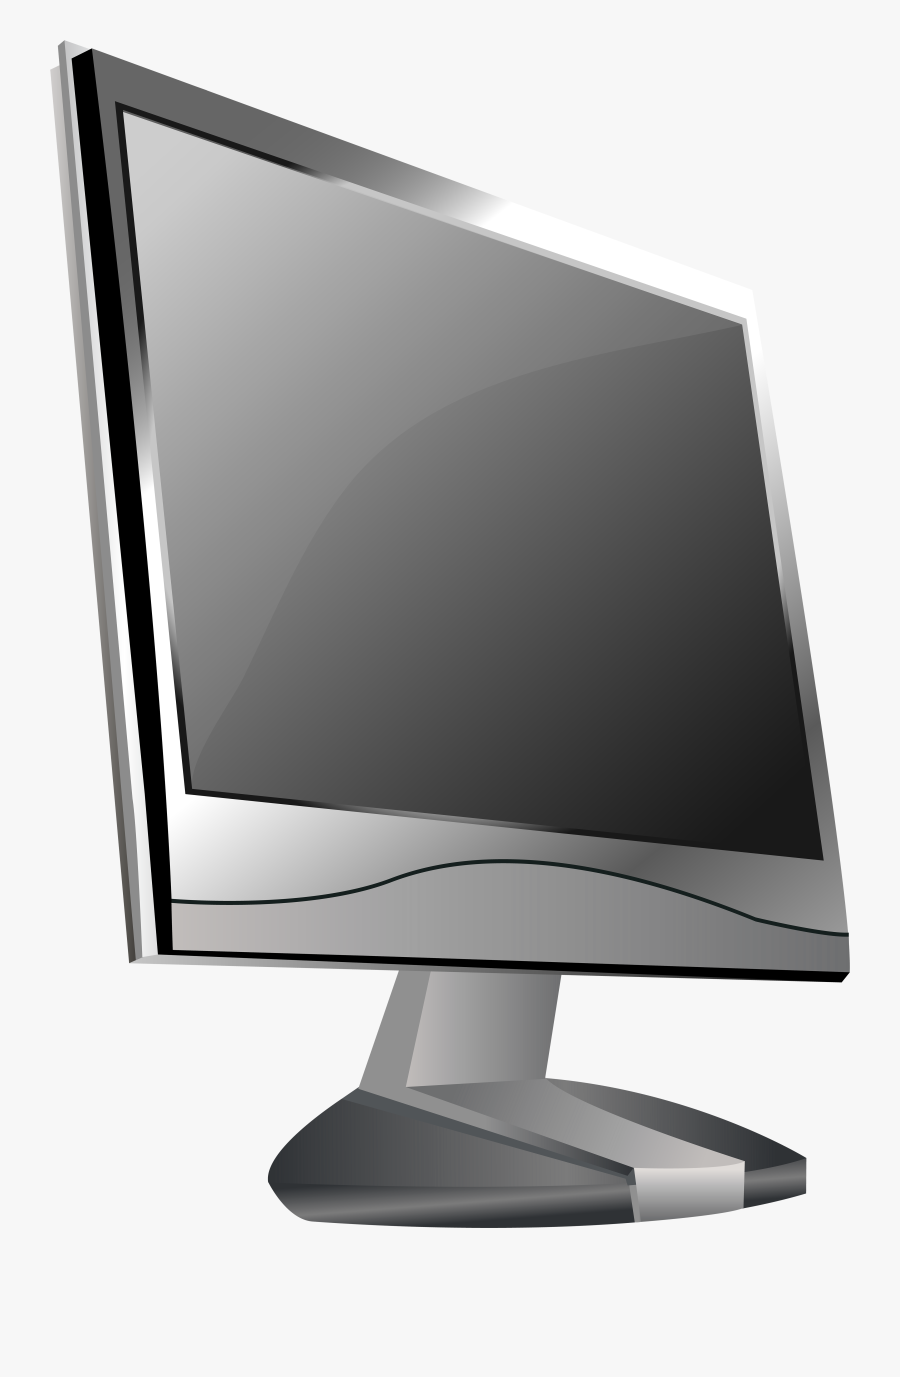 Monitor Png Clip Art - Computer Monitor Clipart Png, Transparent Clipart